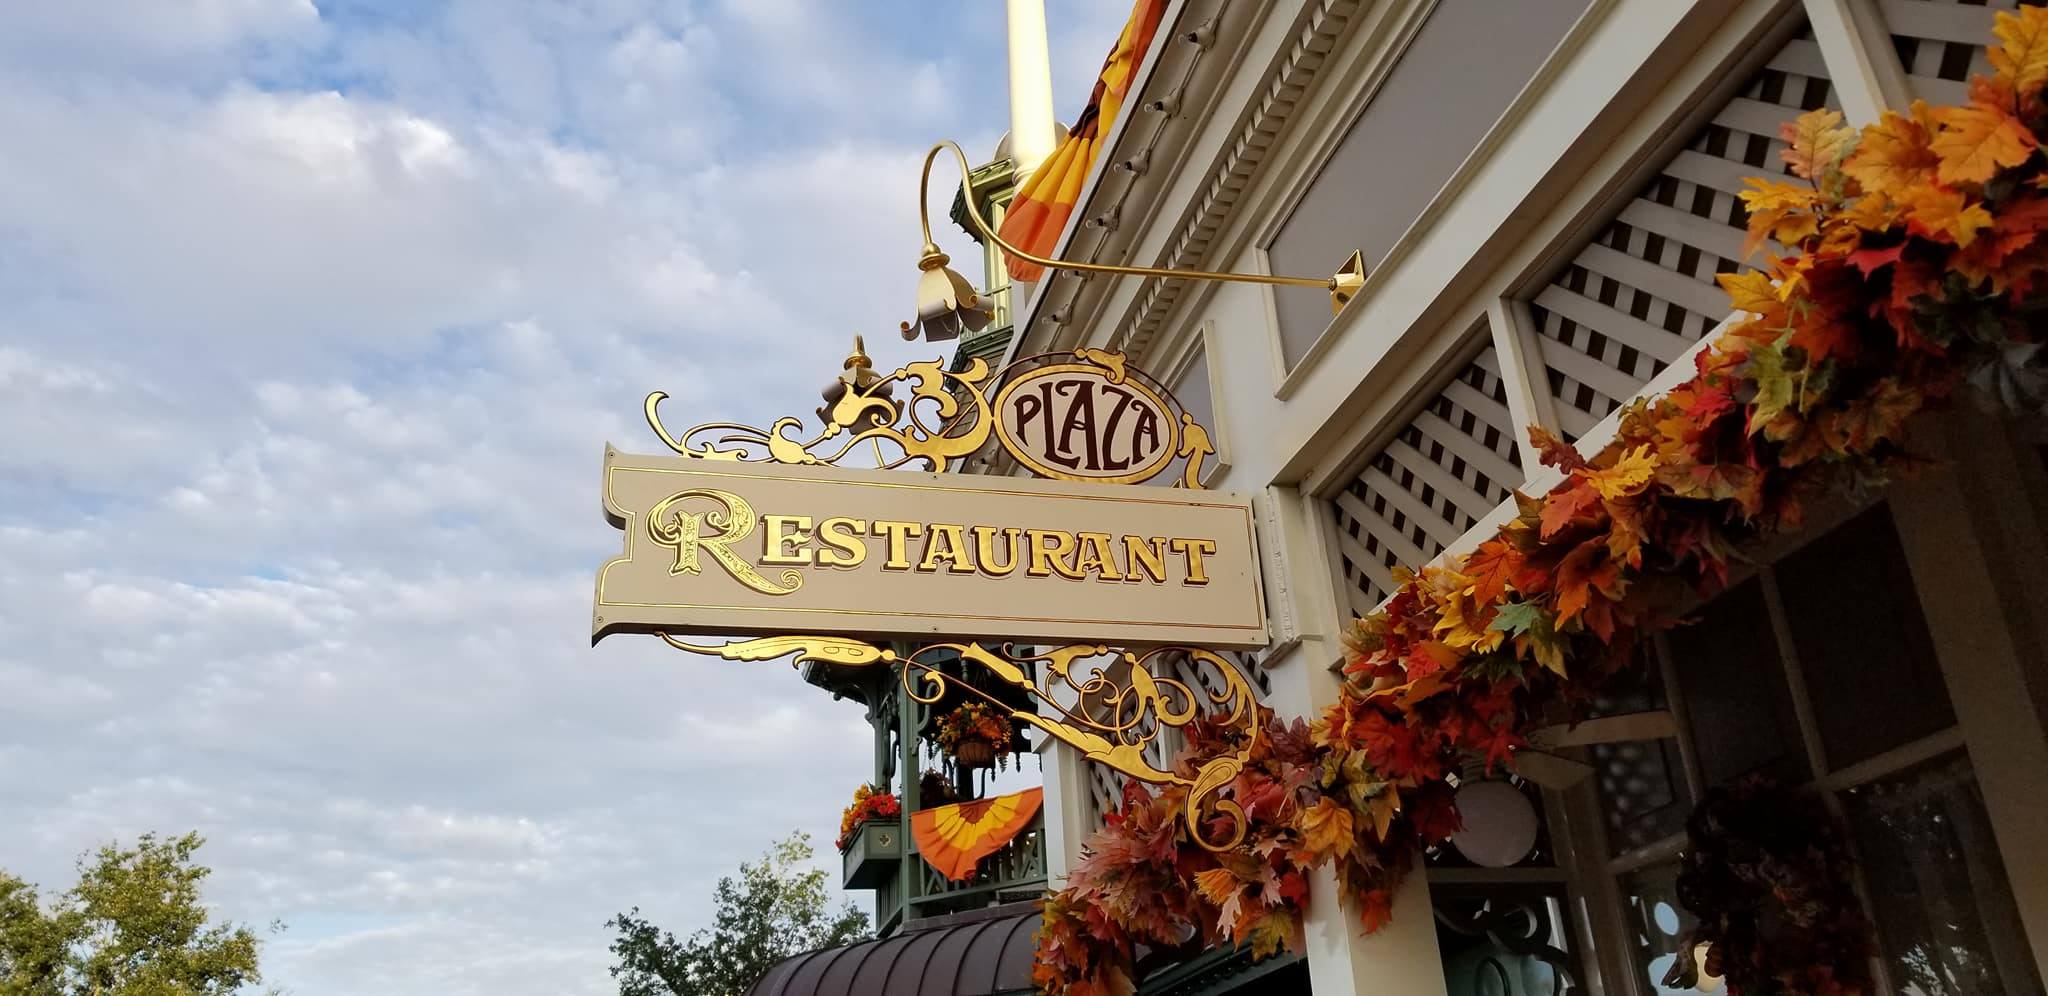 The Plaza Restaurant in the Magic Kingdom to Begin Breakfast Service